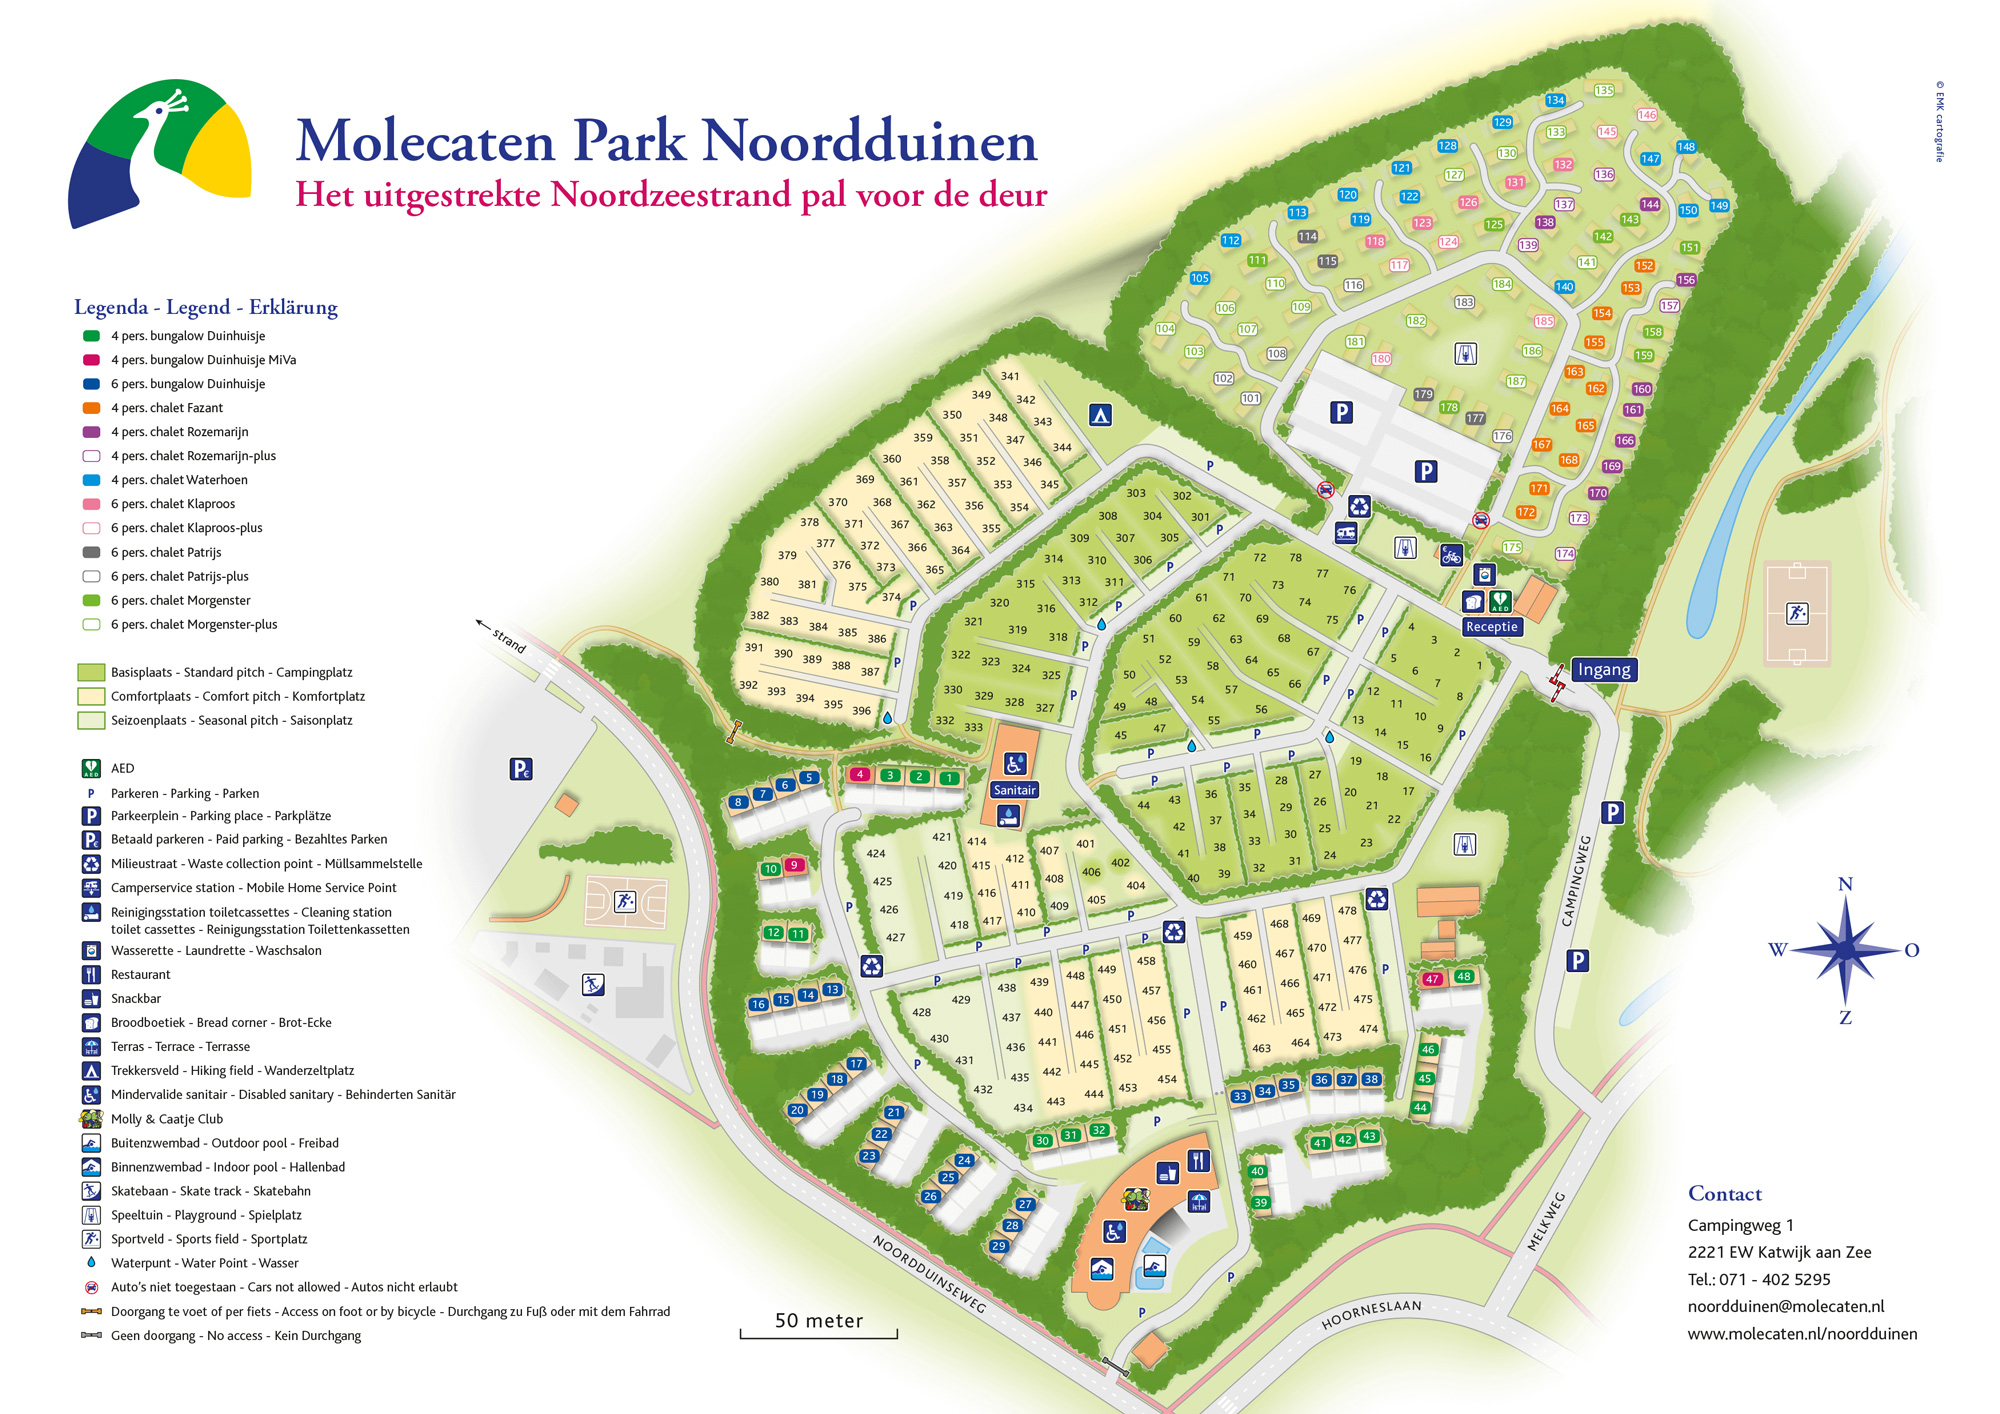 Molecaten Park Noordduinen